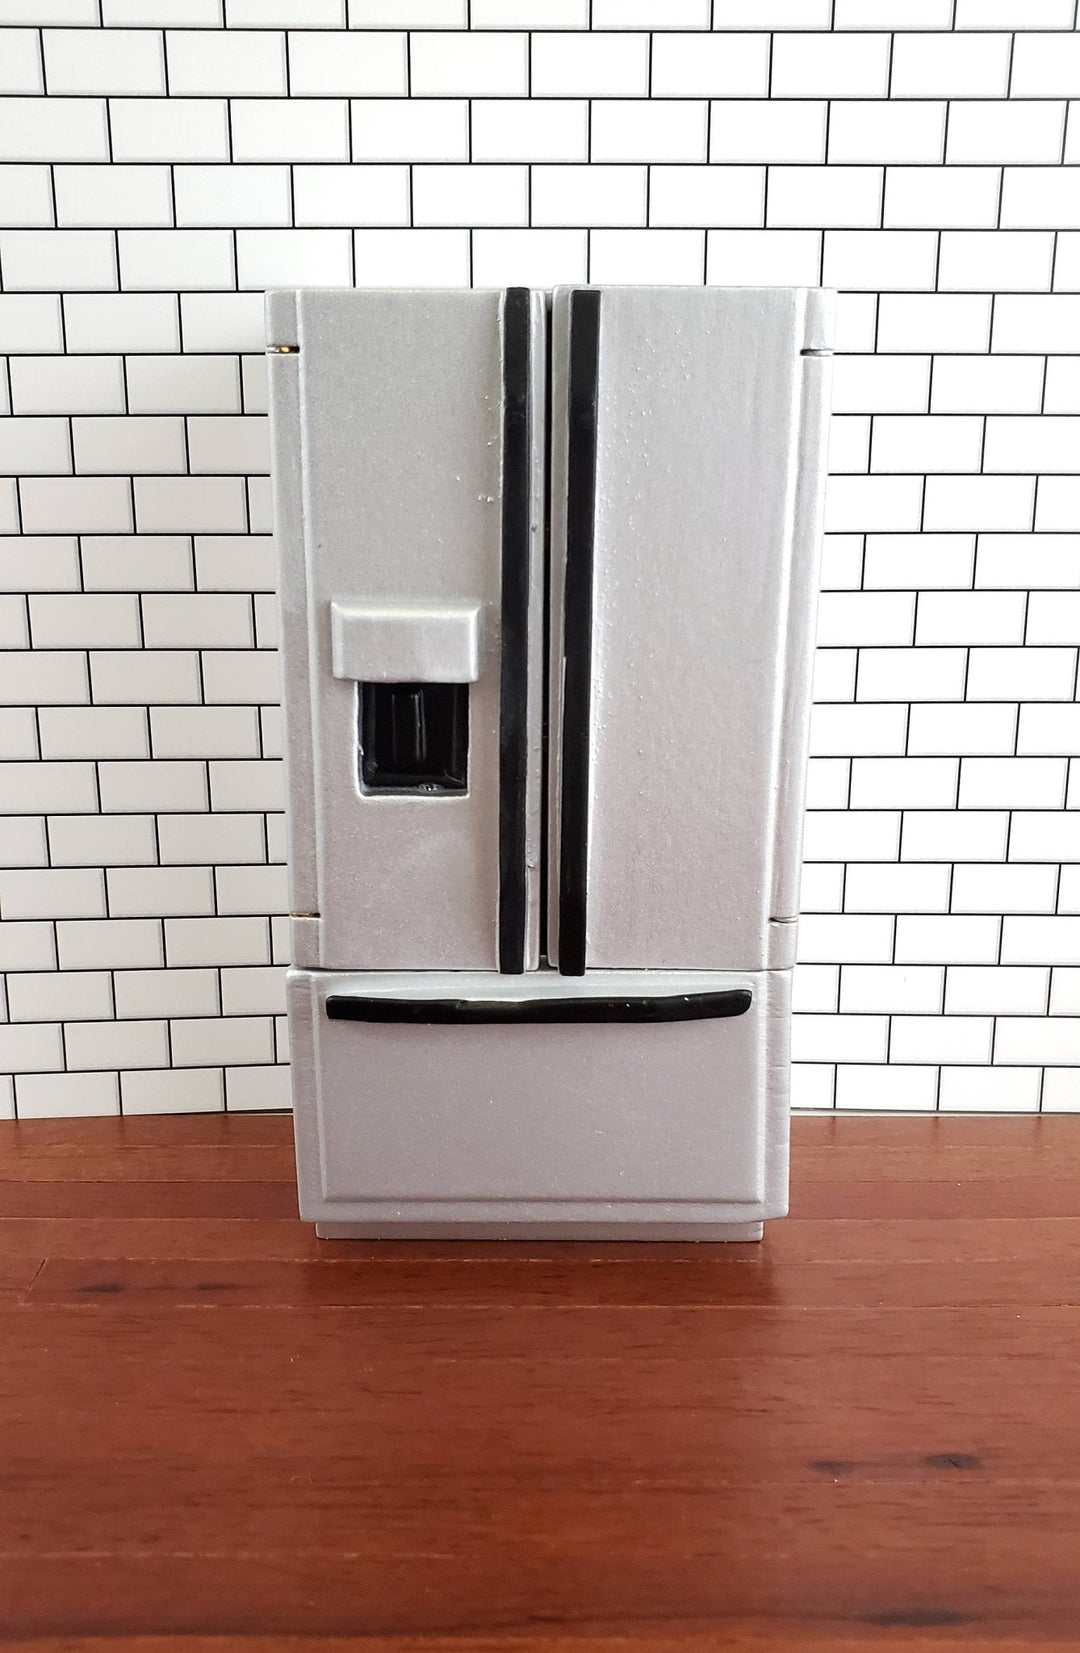 Dollhouse Miniature Fridge Modern Refrigerator Silver Black 1:12 Scale Wood Furniture - Miniature Crush